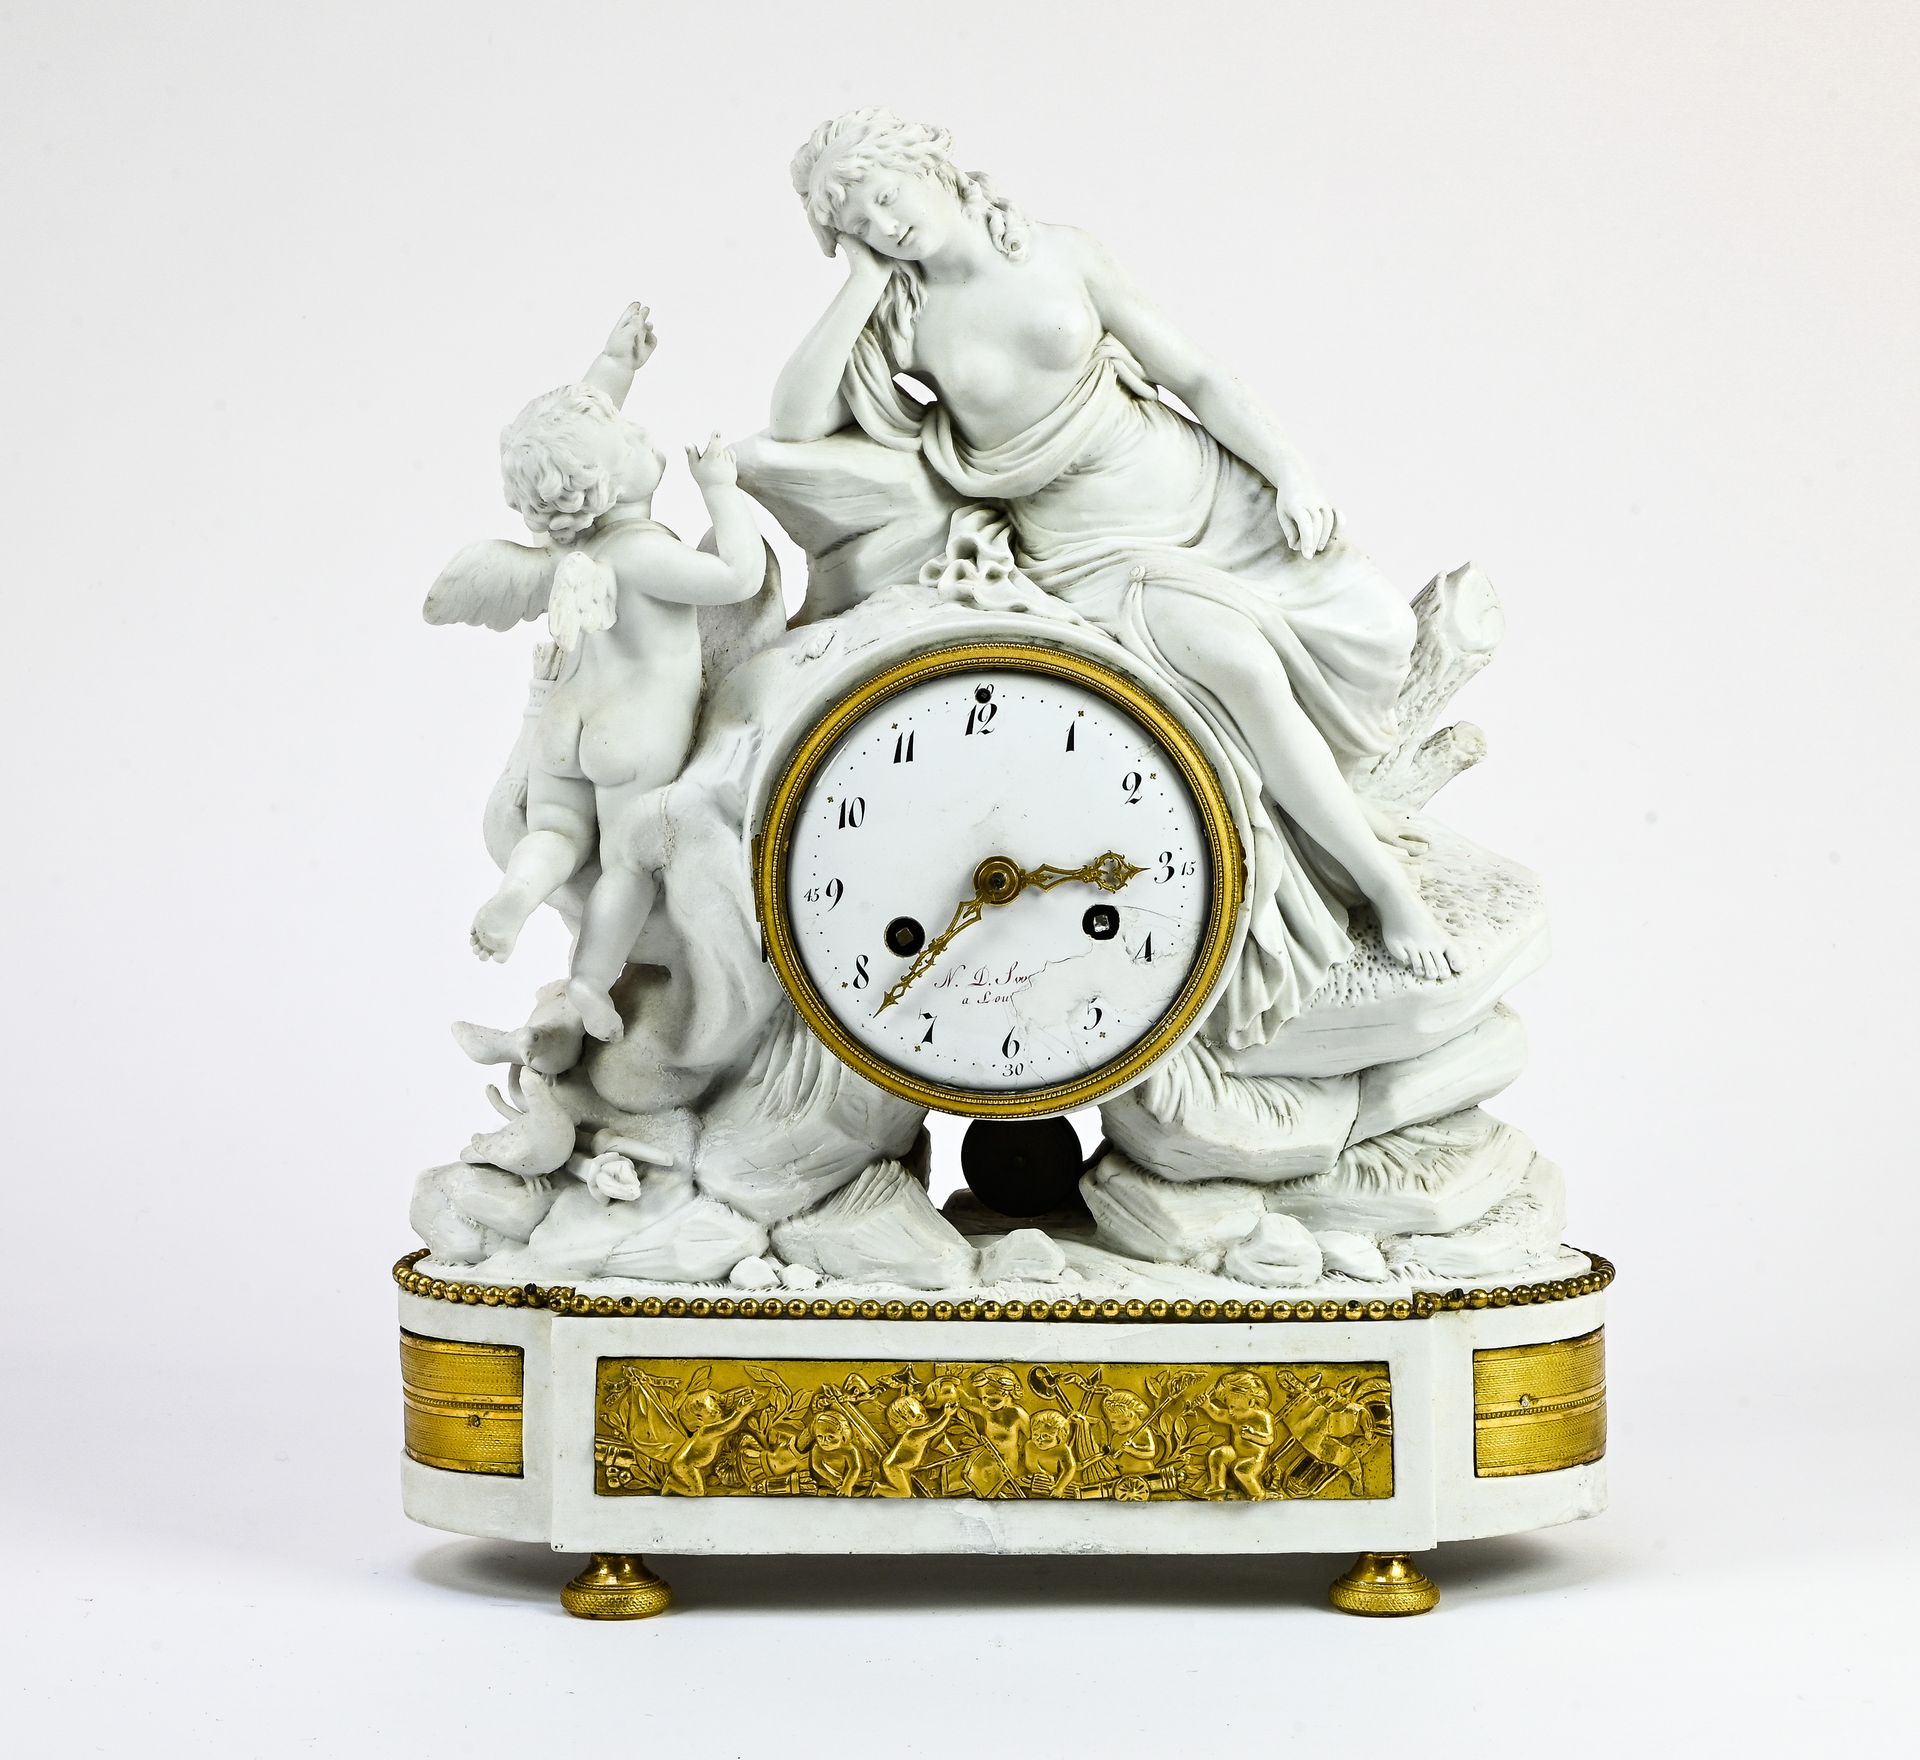 Pendule Vénus et l'Amour PERIODO DE LUIS XIV

Reloj de Venus y Amor



en biscui&hellip;